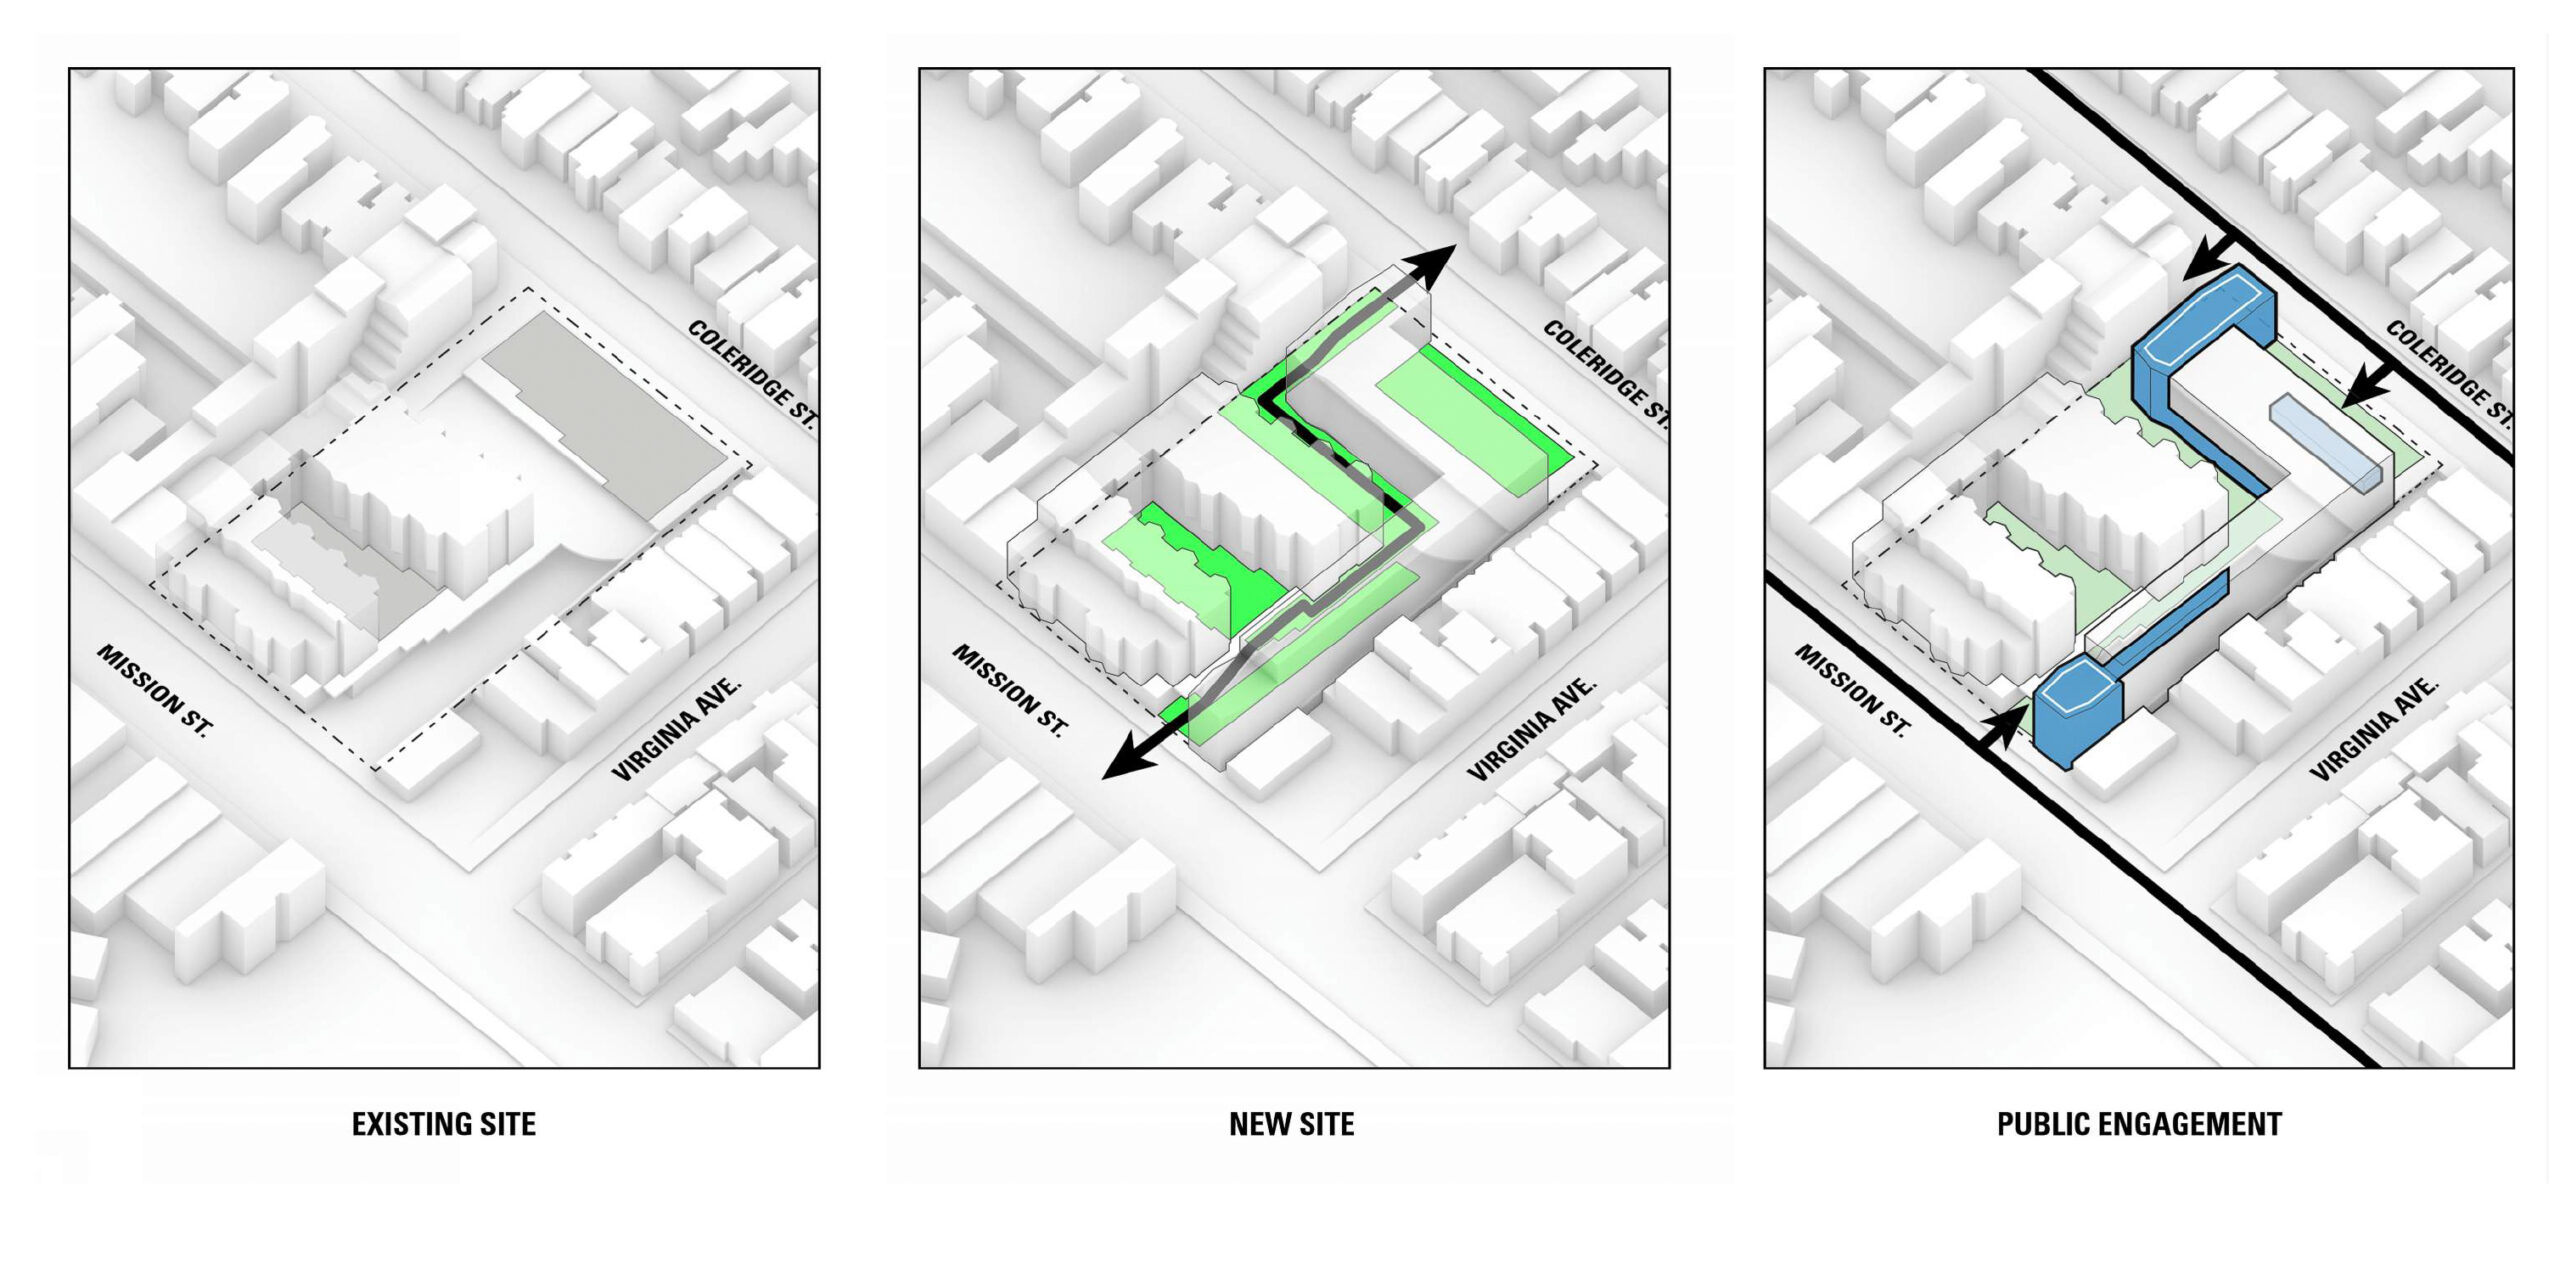 3333 Mission Street redesign scheme, illustration by BAR Architects